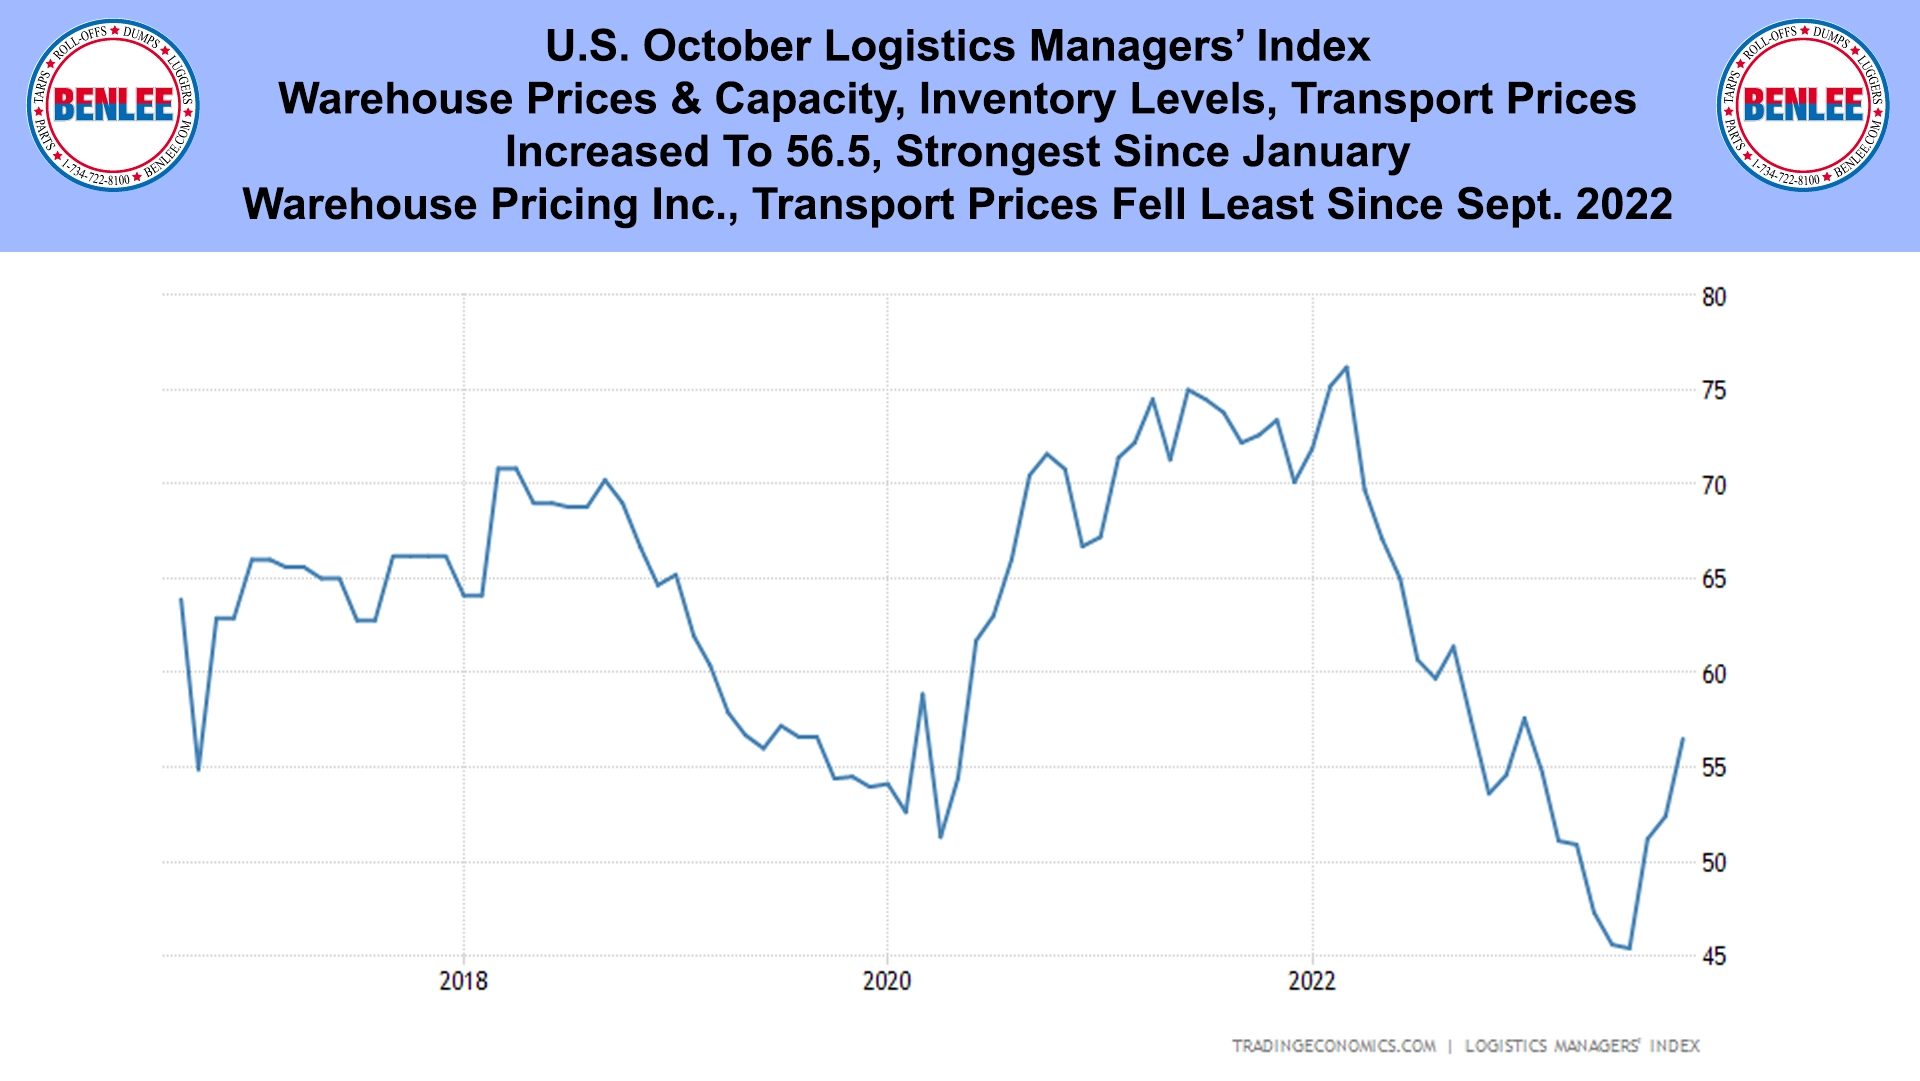 U.S. October Logistics Managers’ Index